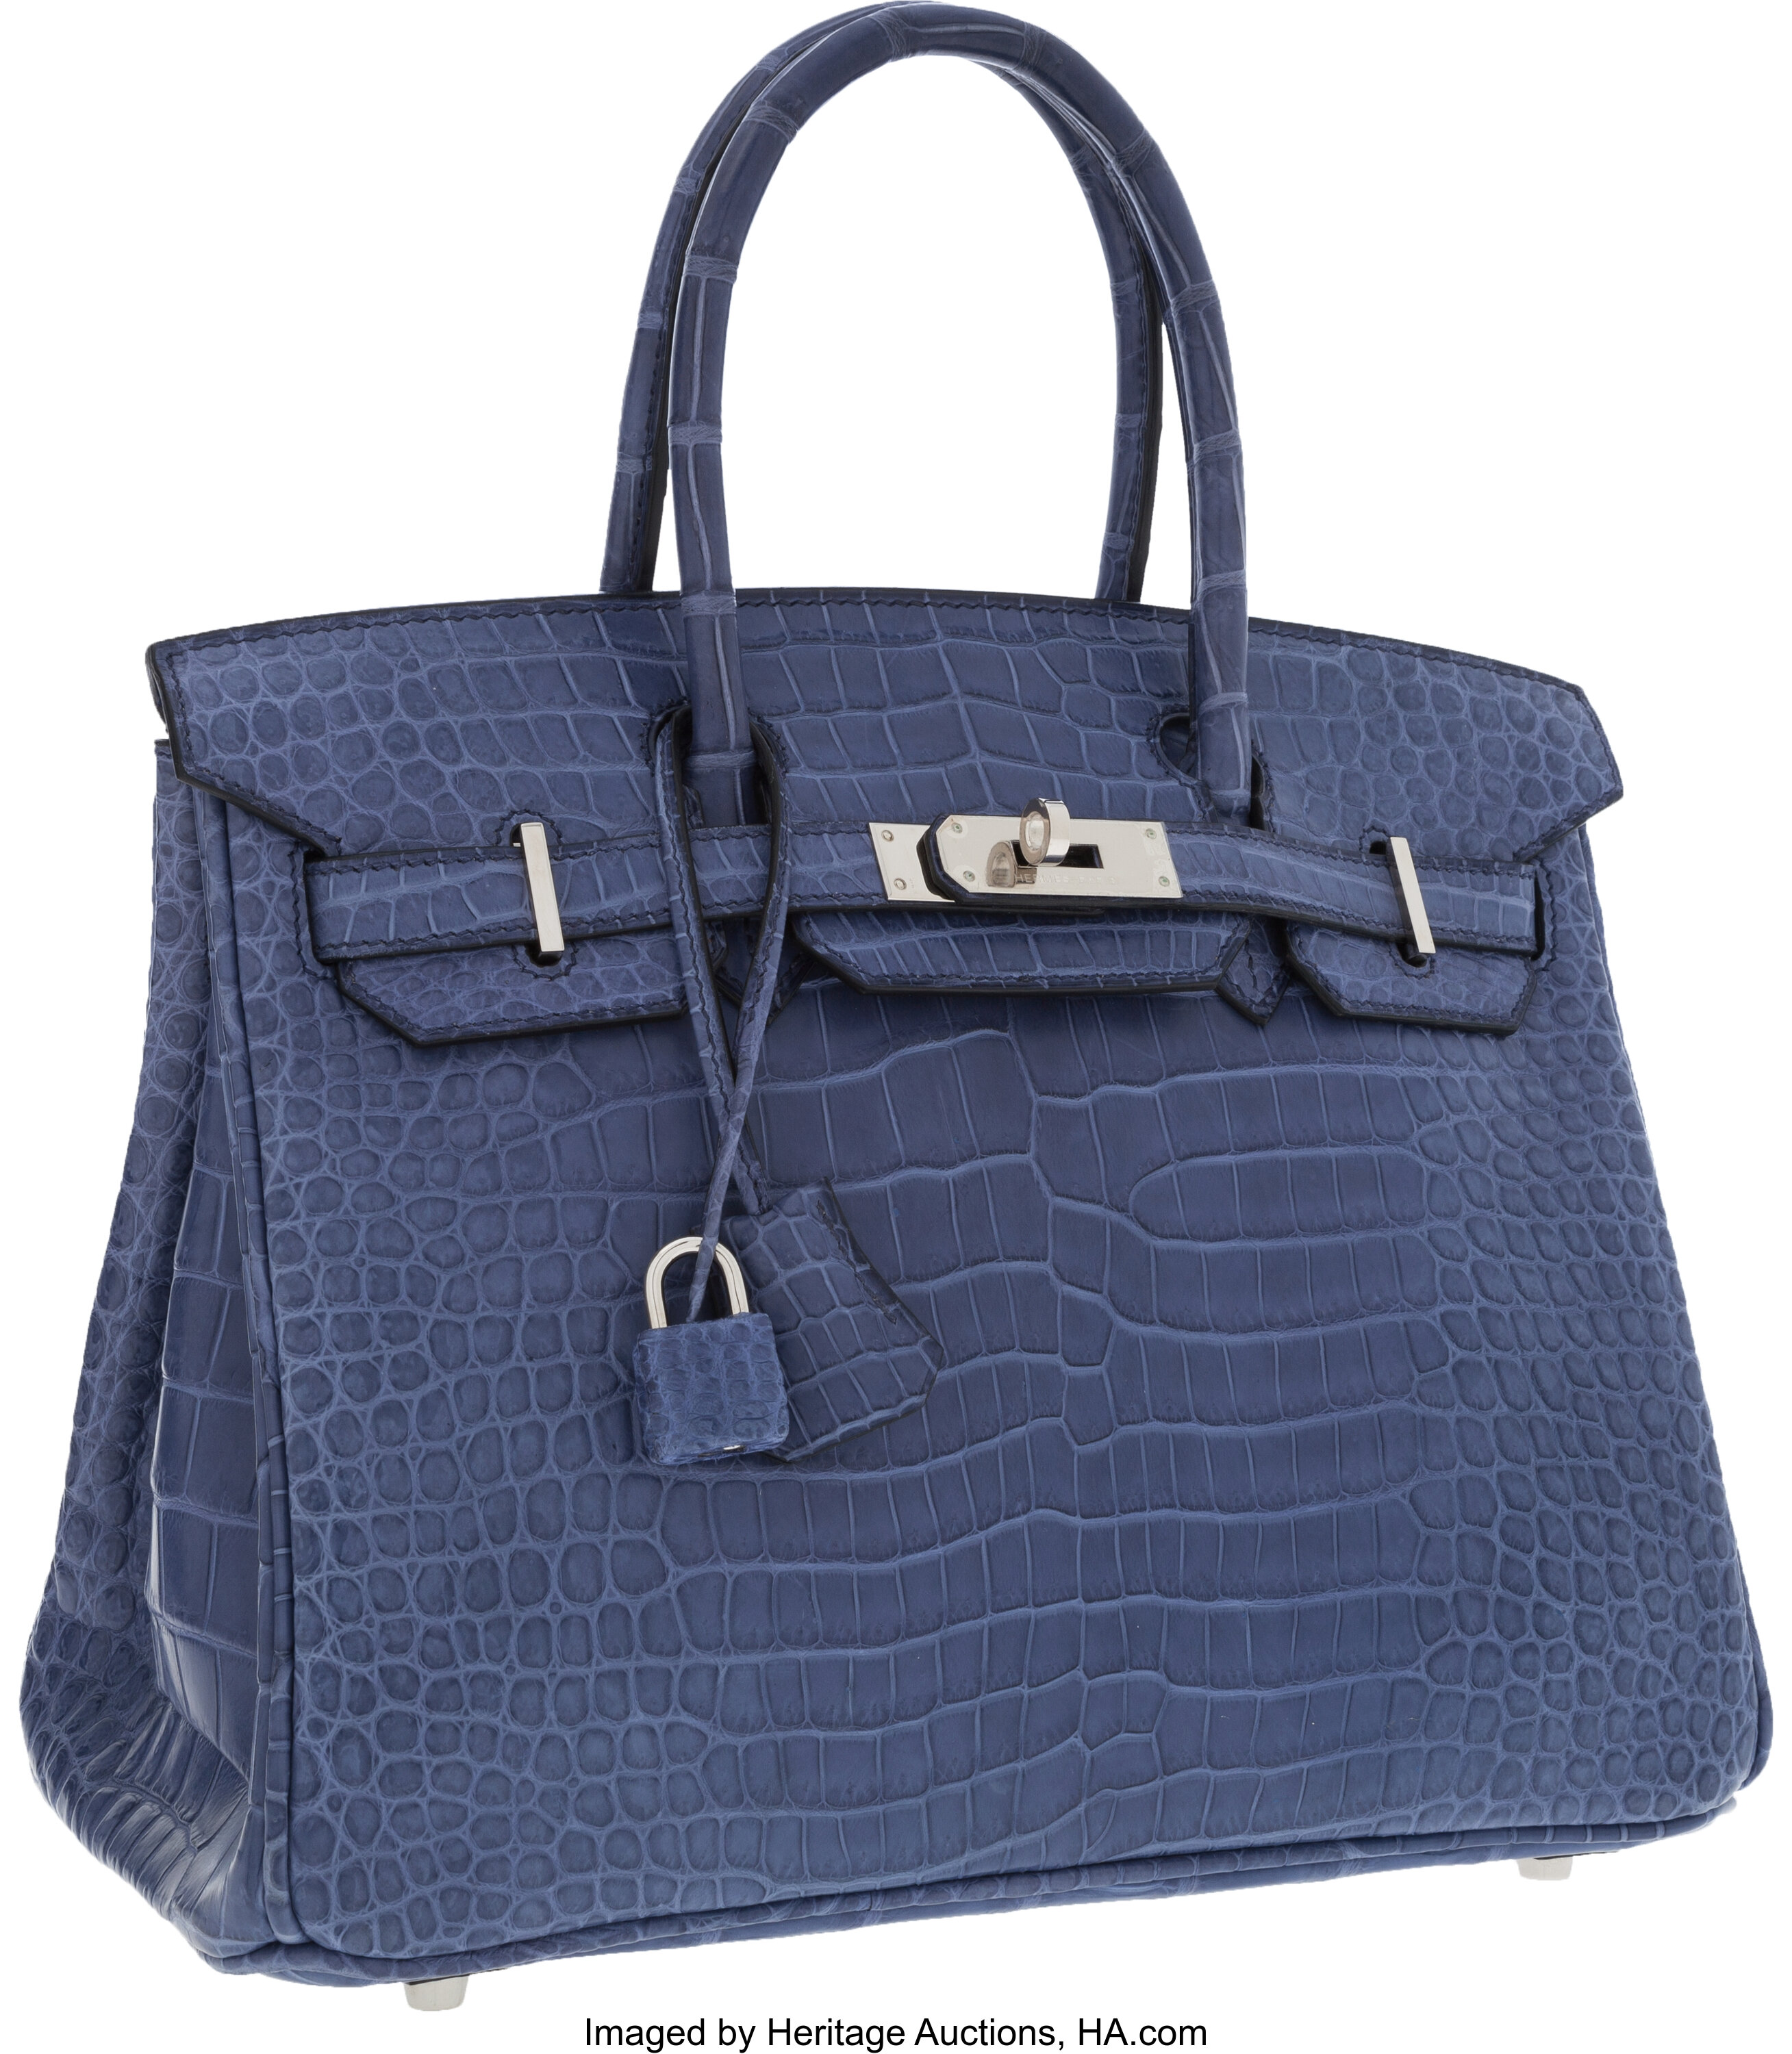 Sold at Auction: Hermes Kelly Cut Bag, Blue Marine Crocodile